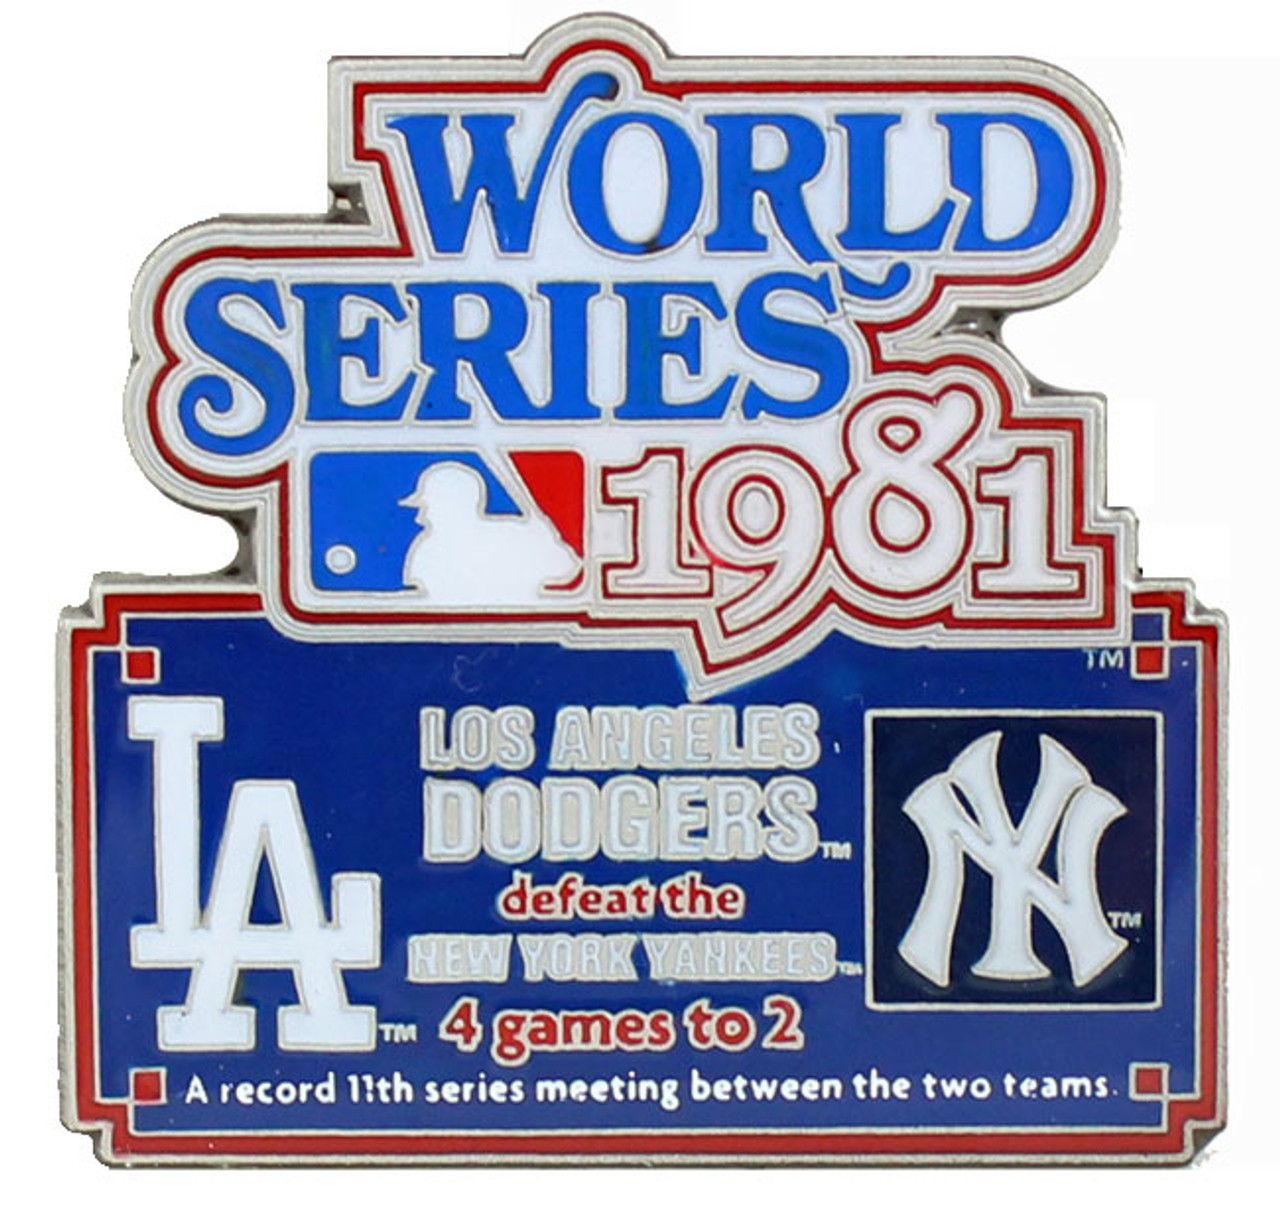 1981 World Series Game 3 Yankees @ Dodgers 